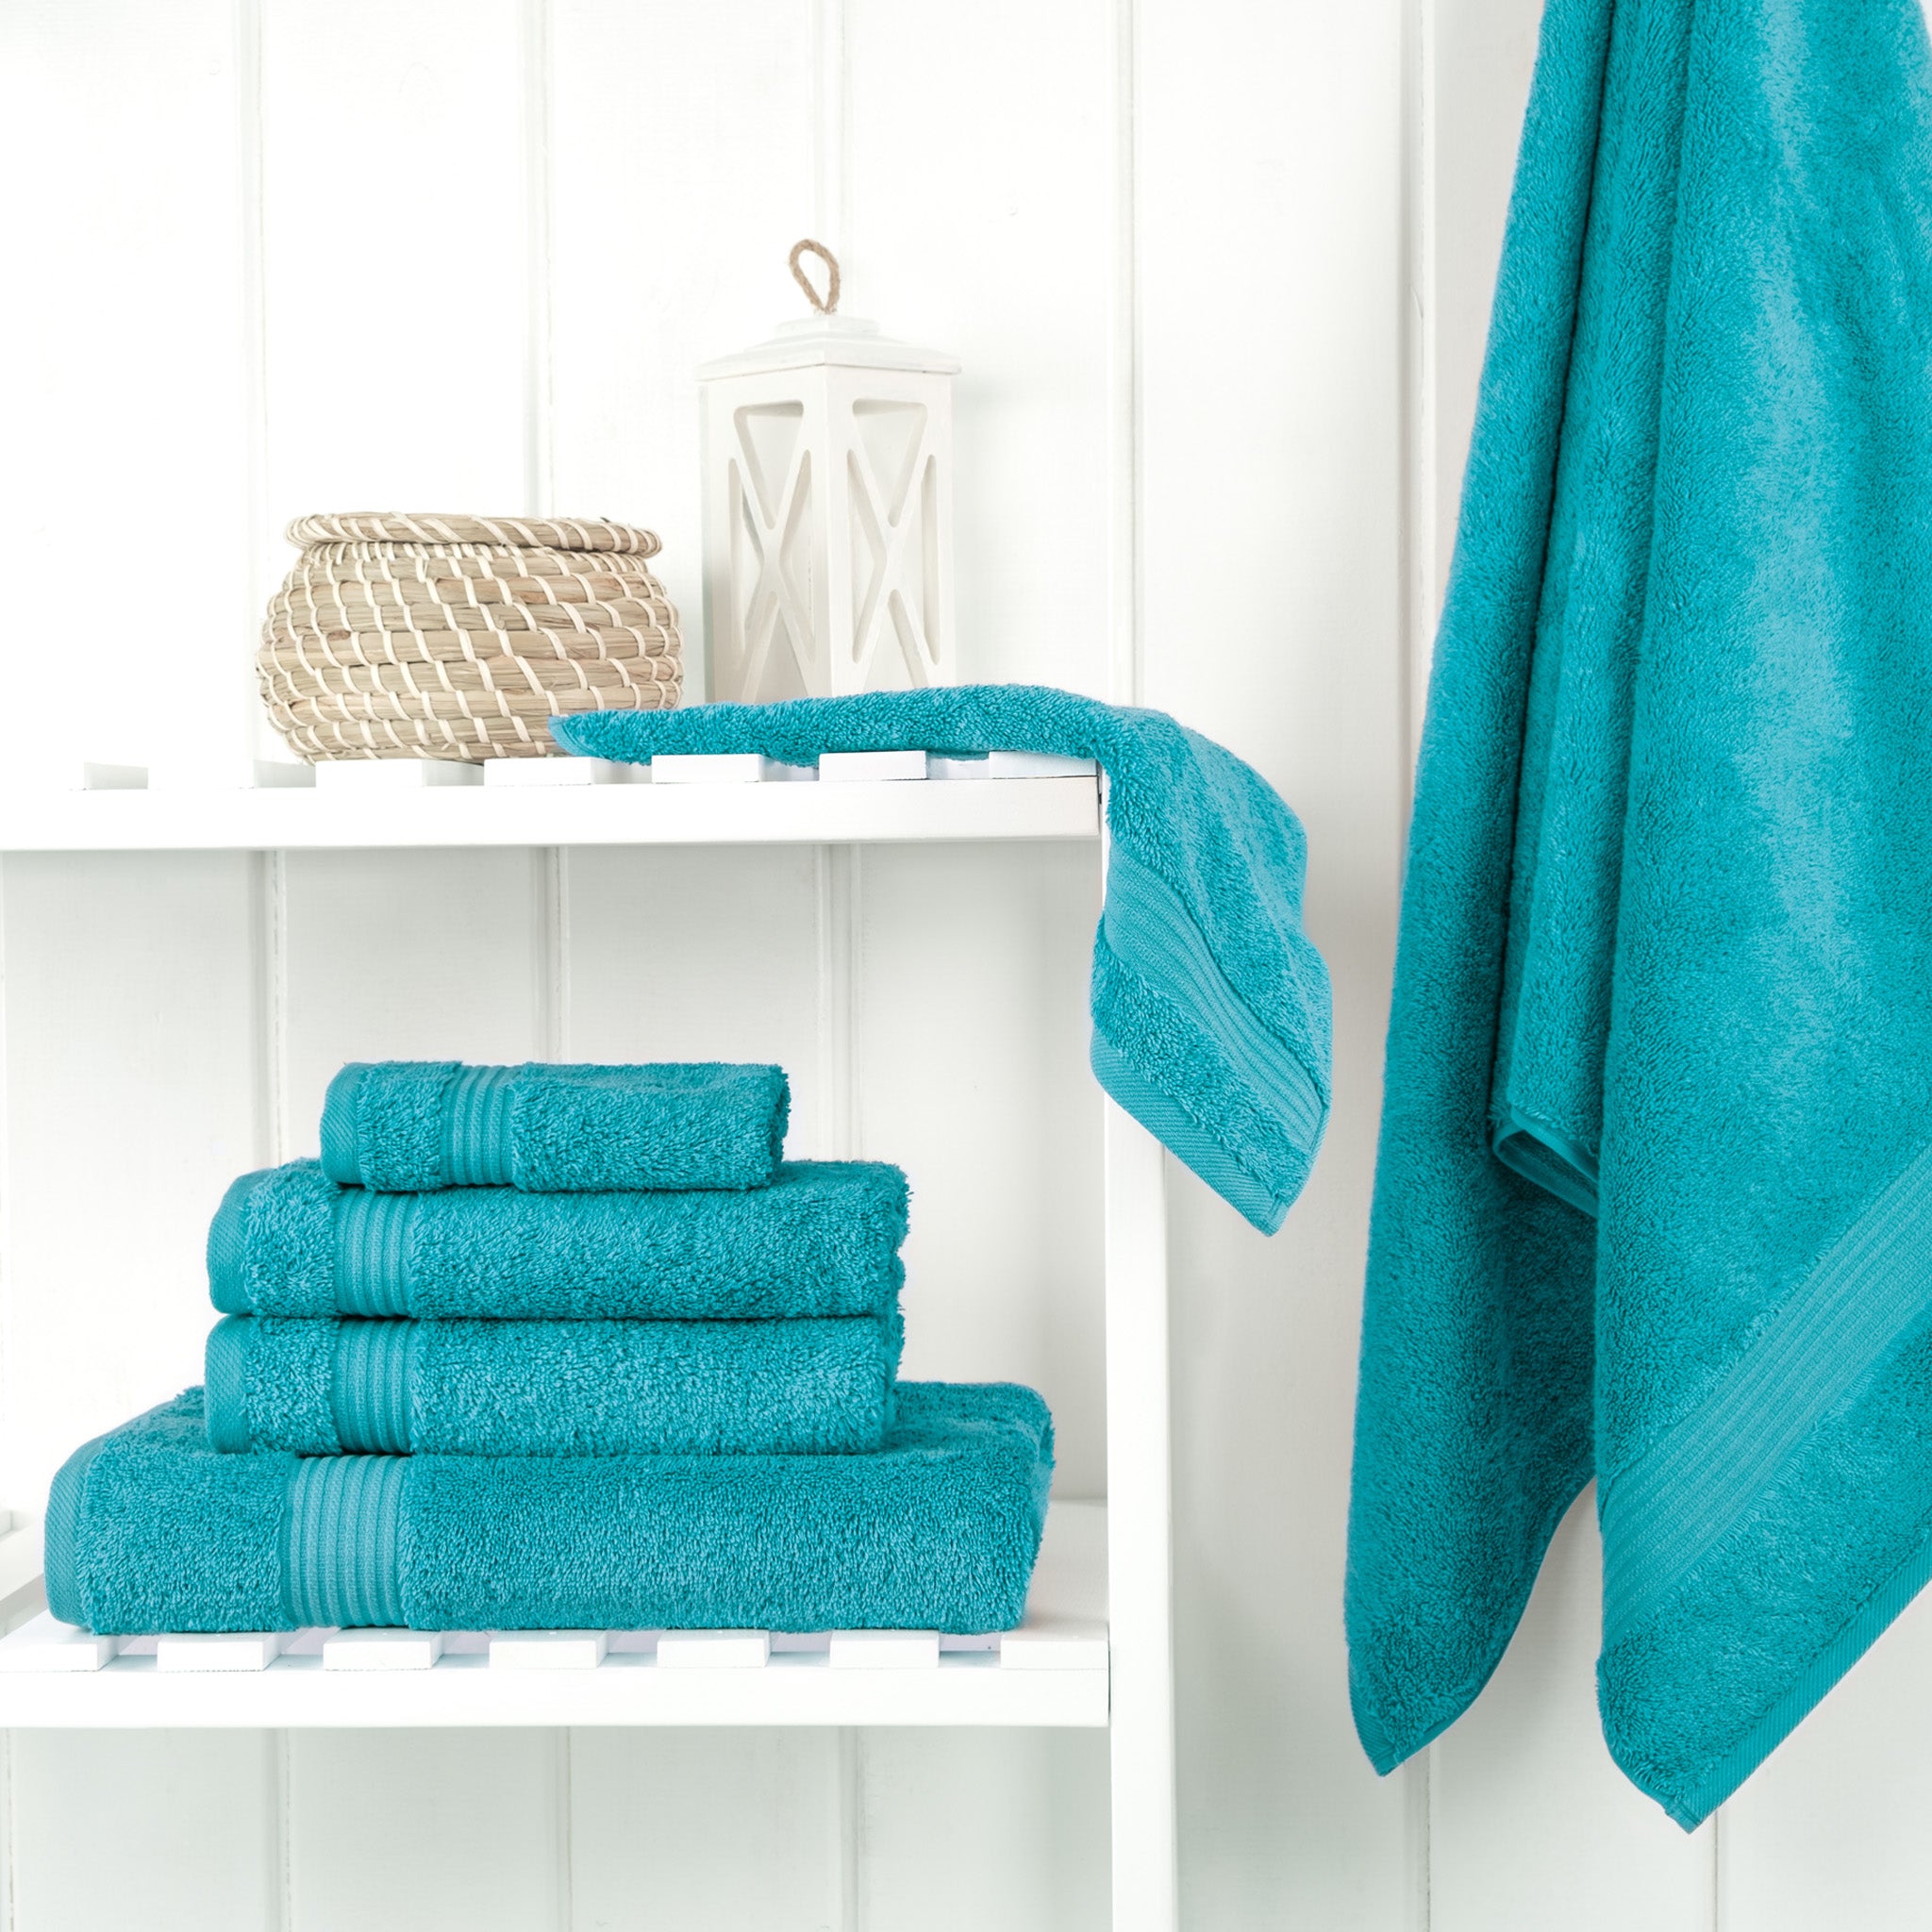 American Soft Linen Luxury 4 Piece Bath Towel Set, 100% Cotton Turkish  Towels for Bathroom, Turquoise 